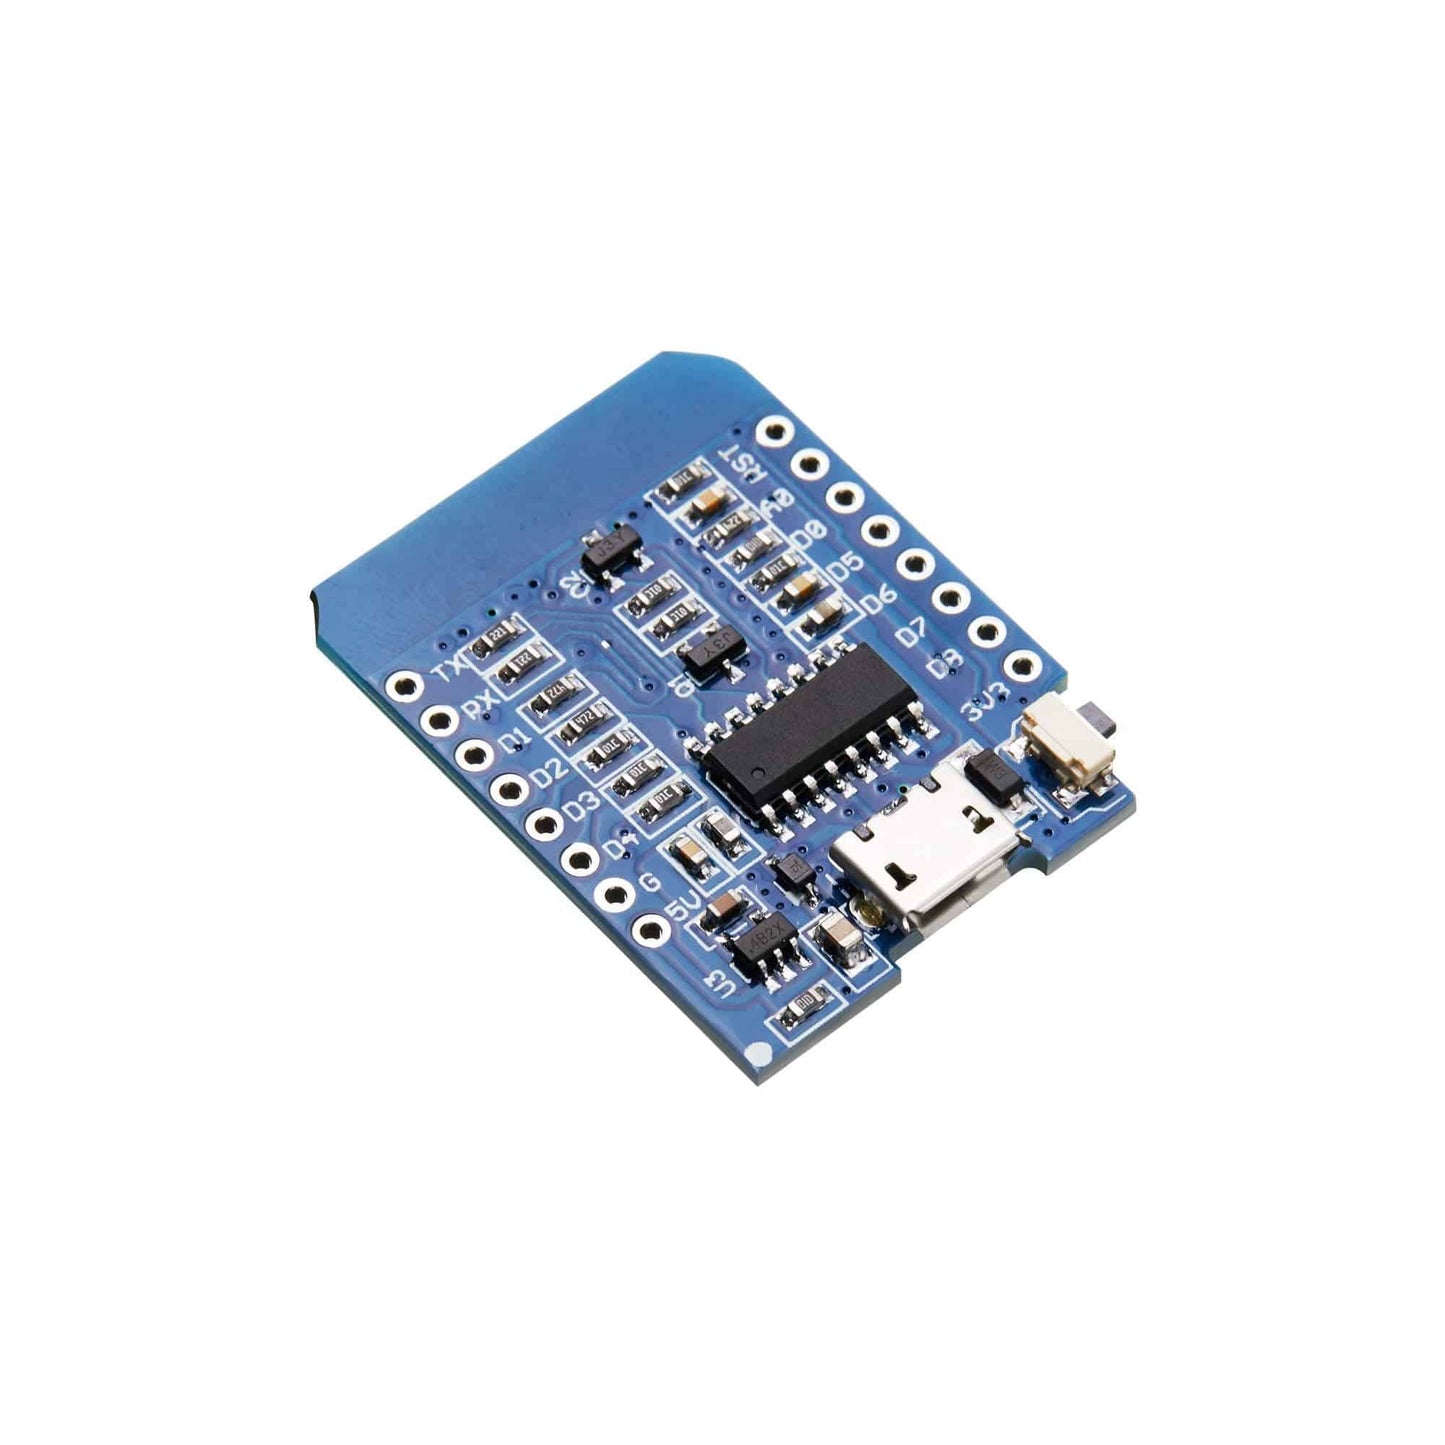 D1 Mini Board Wemos D1 Mini - IOT ESP8266 Based